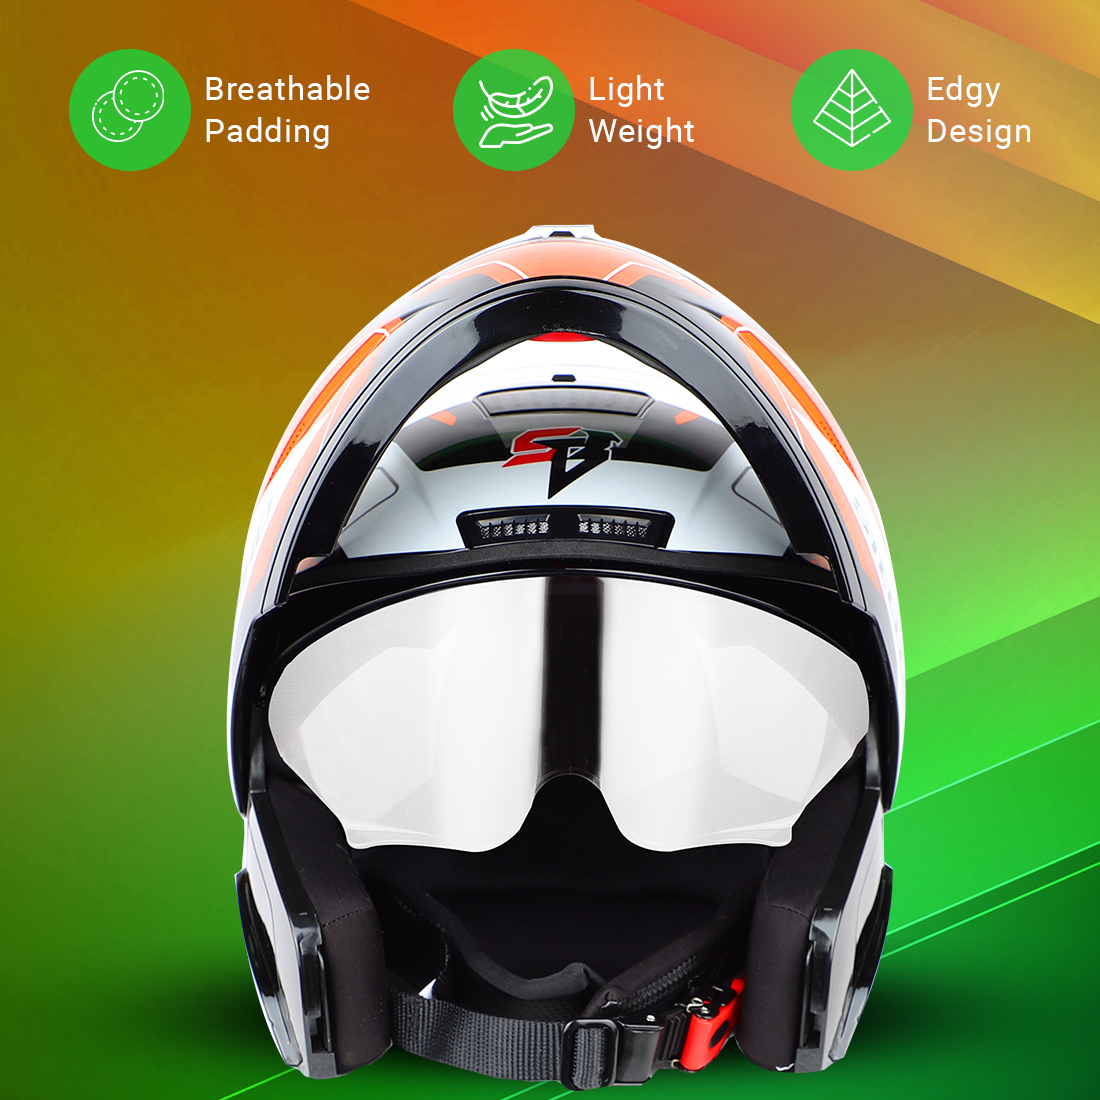 Steelbird SBA-7 Huracan ISI Certified Flip-Up Helmet For Men And Women With Inner Sun Shield (Glossy Black Orange)